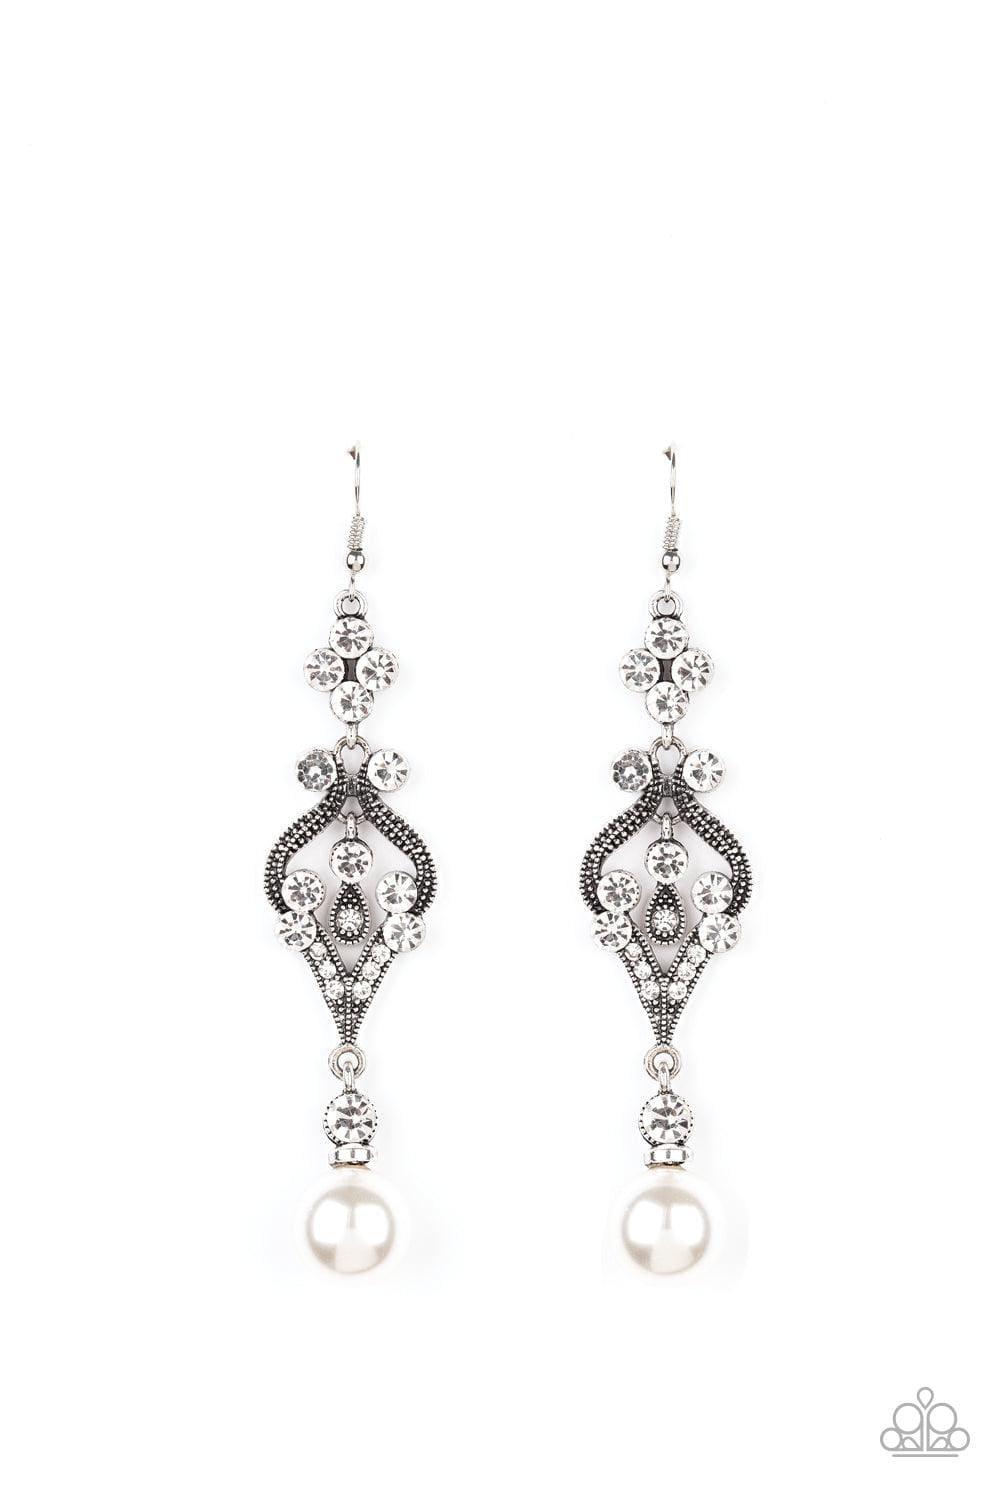 Paparazzi Accessories - Elegantly Extravagant - White Earrings - Bling by JessieK